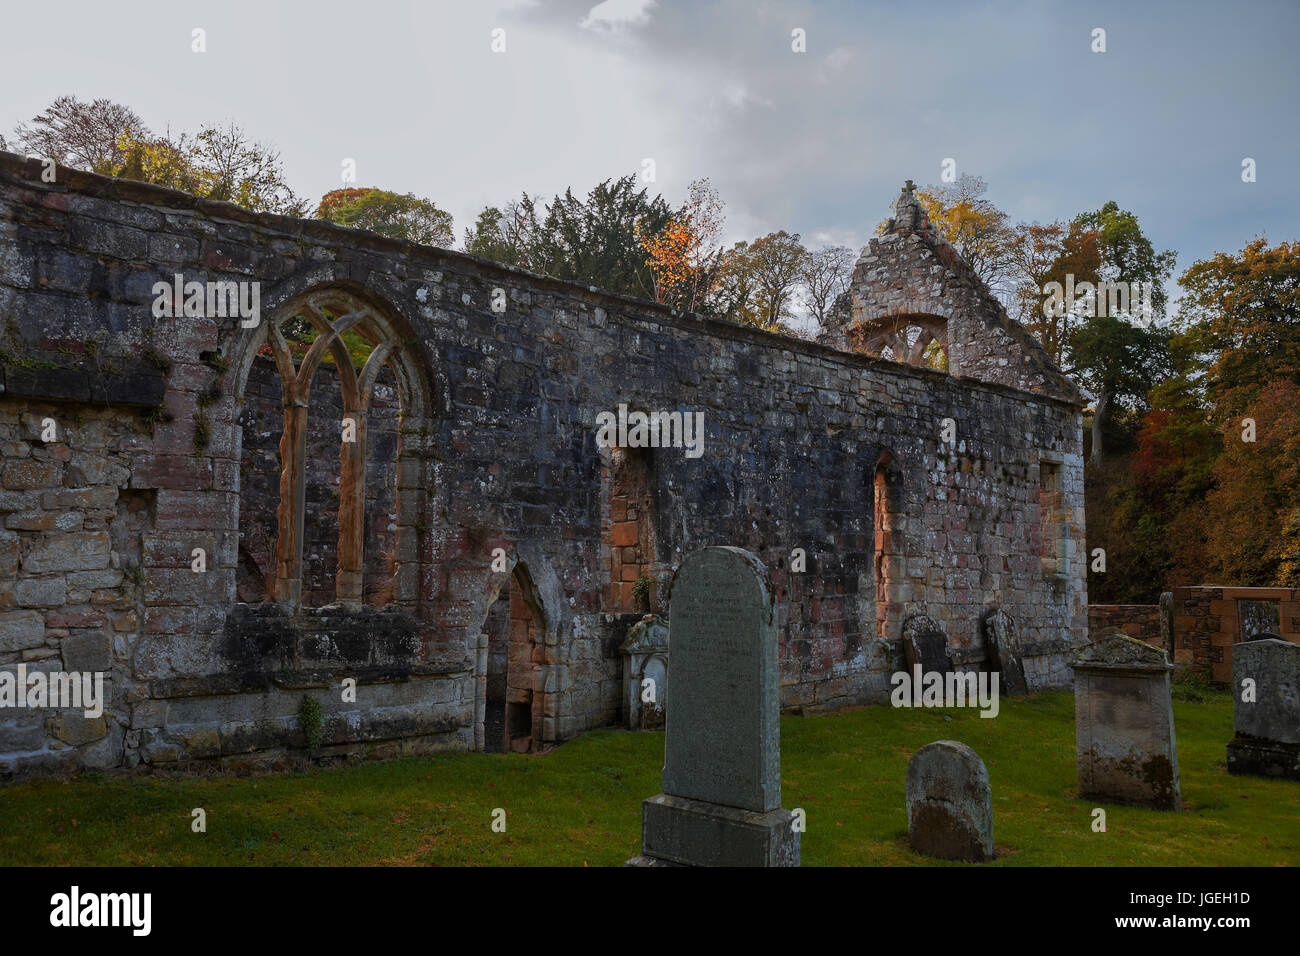 The ruins of Old Temple Kirk, Midlothian, Scotland Stock Photo